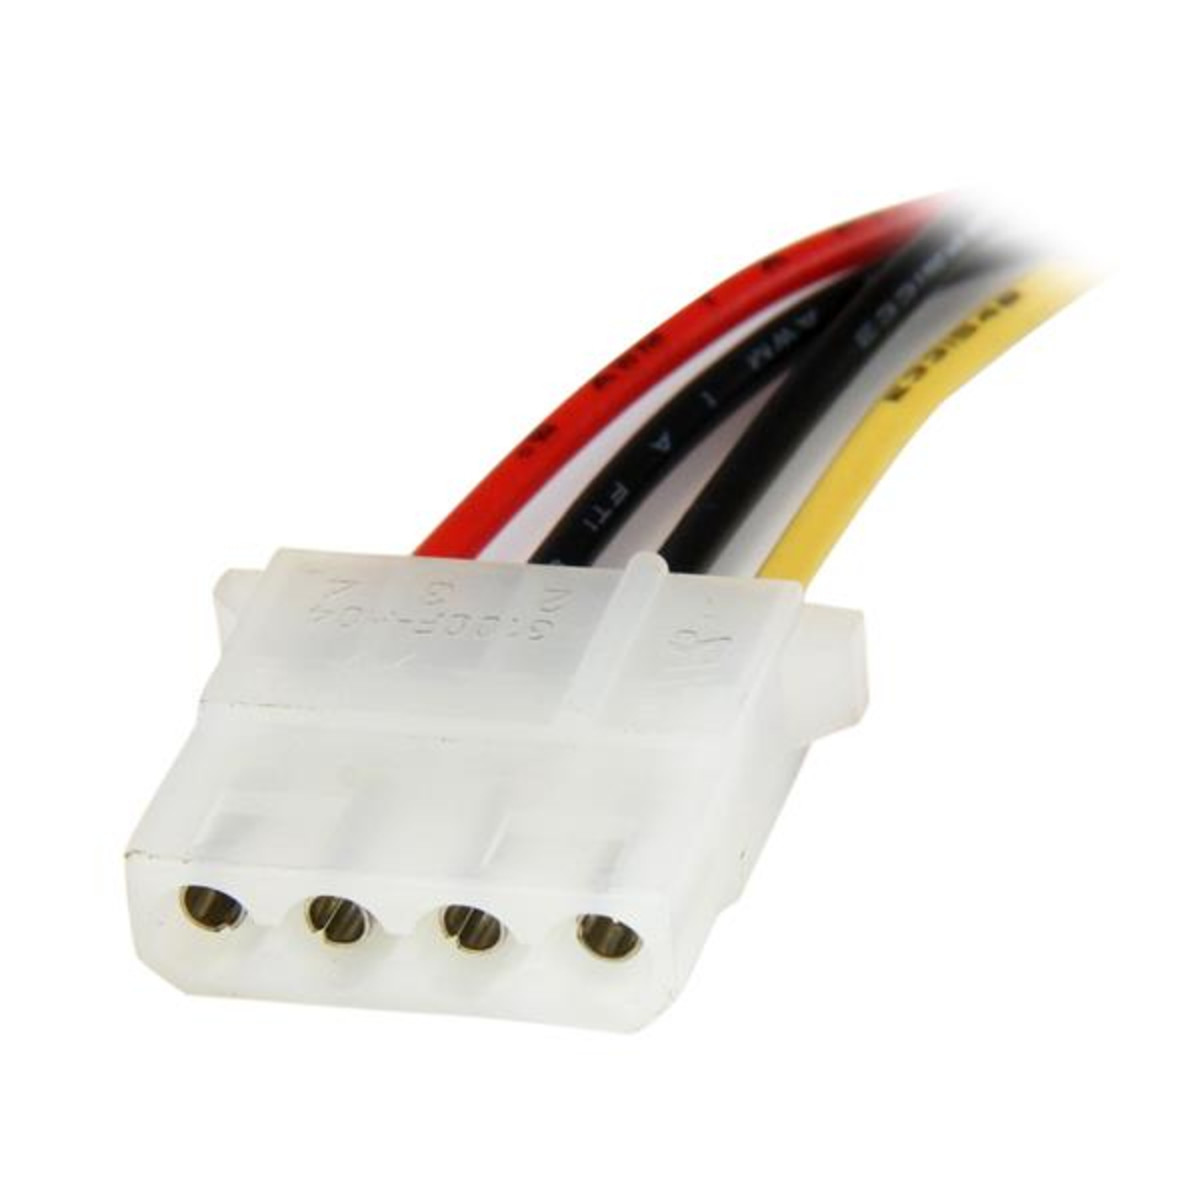 12 SATA-Molex LP4 Power Cable Adapter